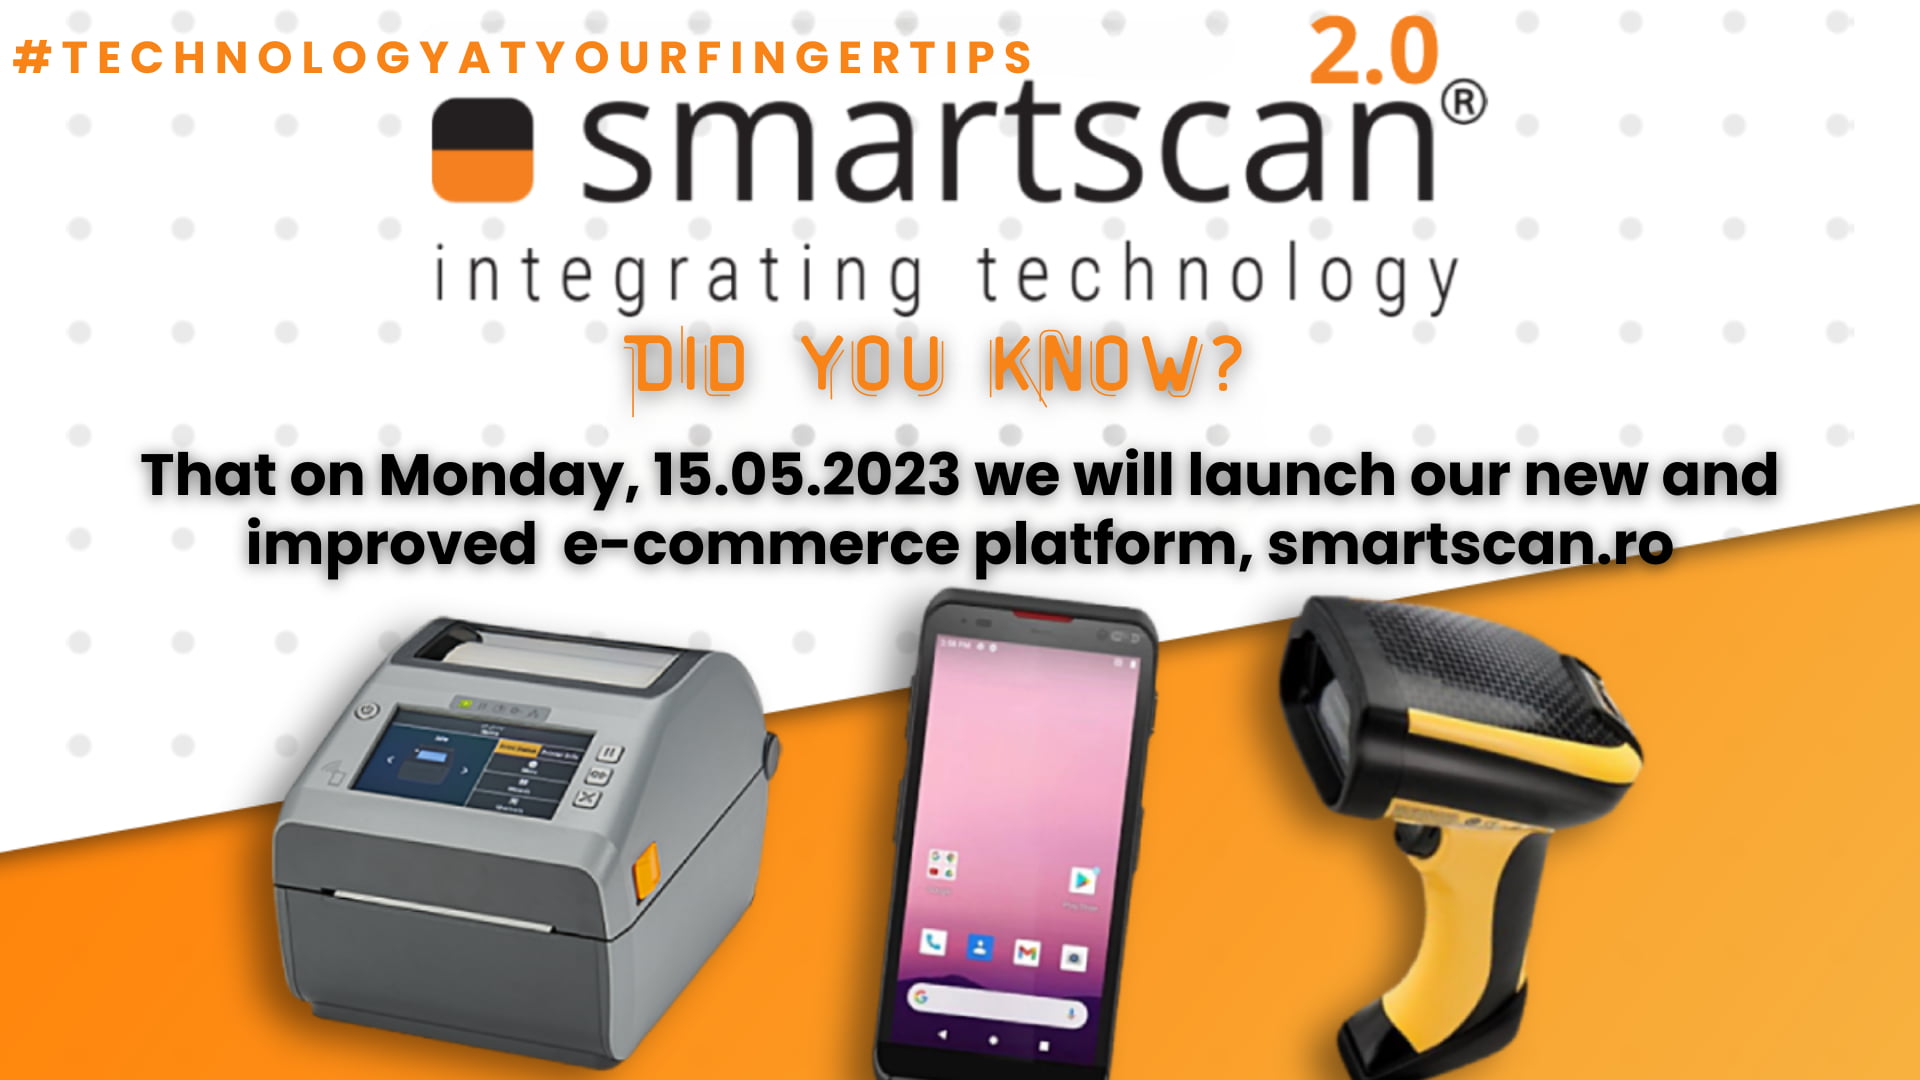 E- commerce - the new SmartScan.ro